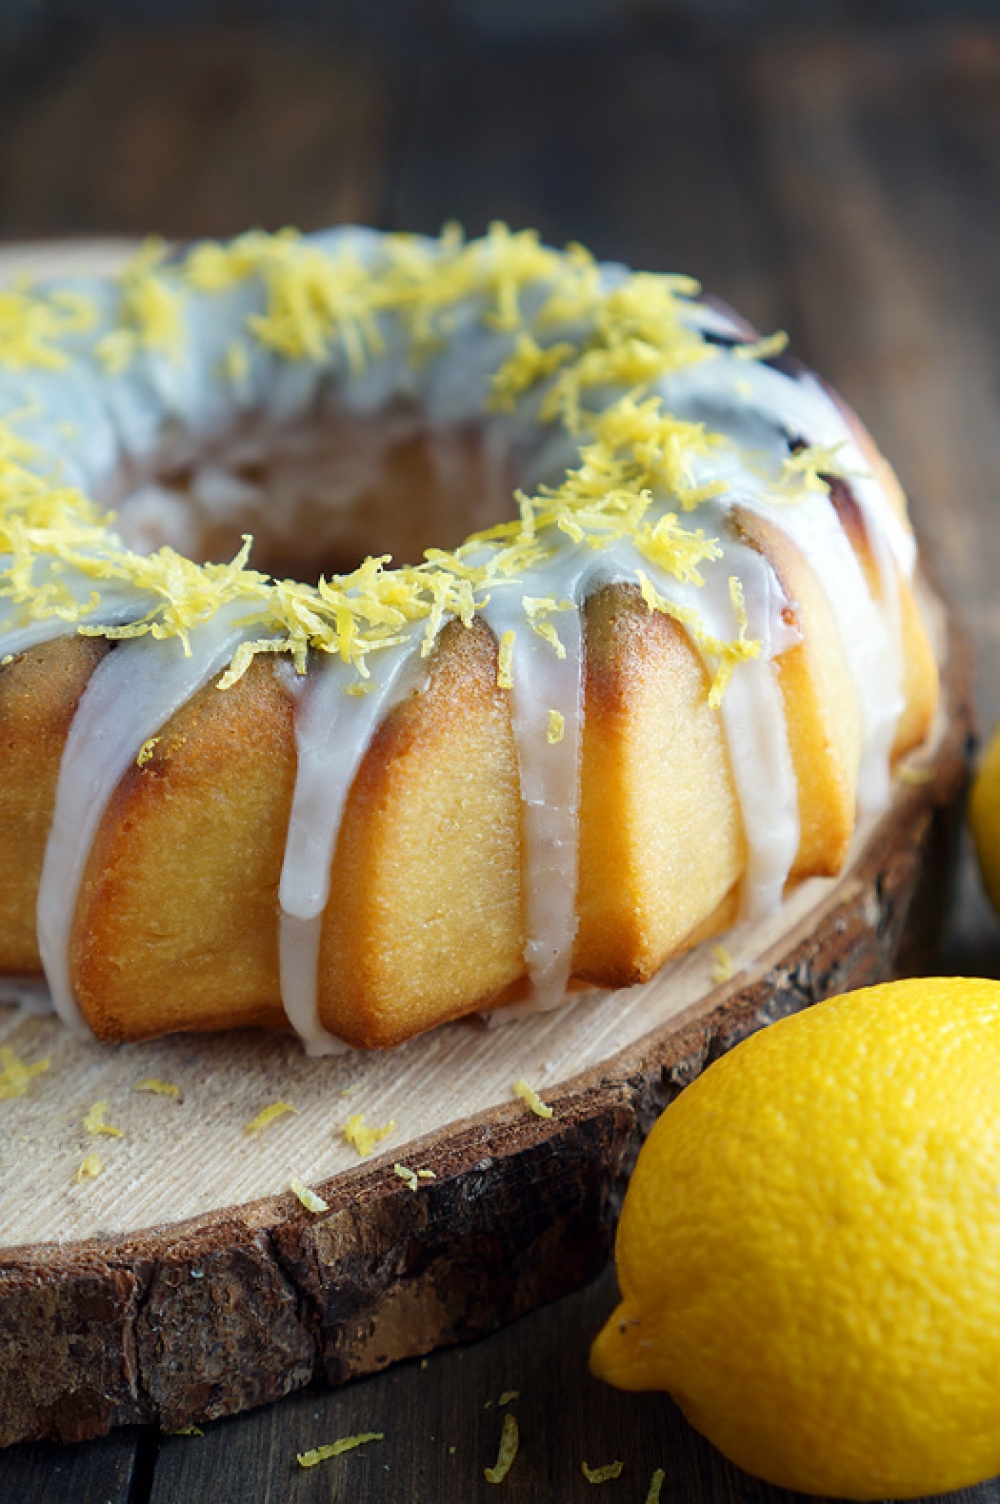 The softest lemon cake in the world